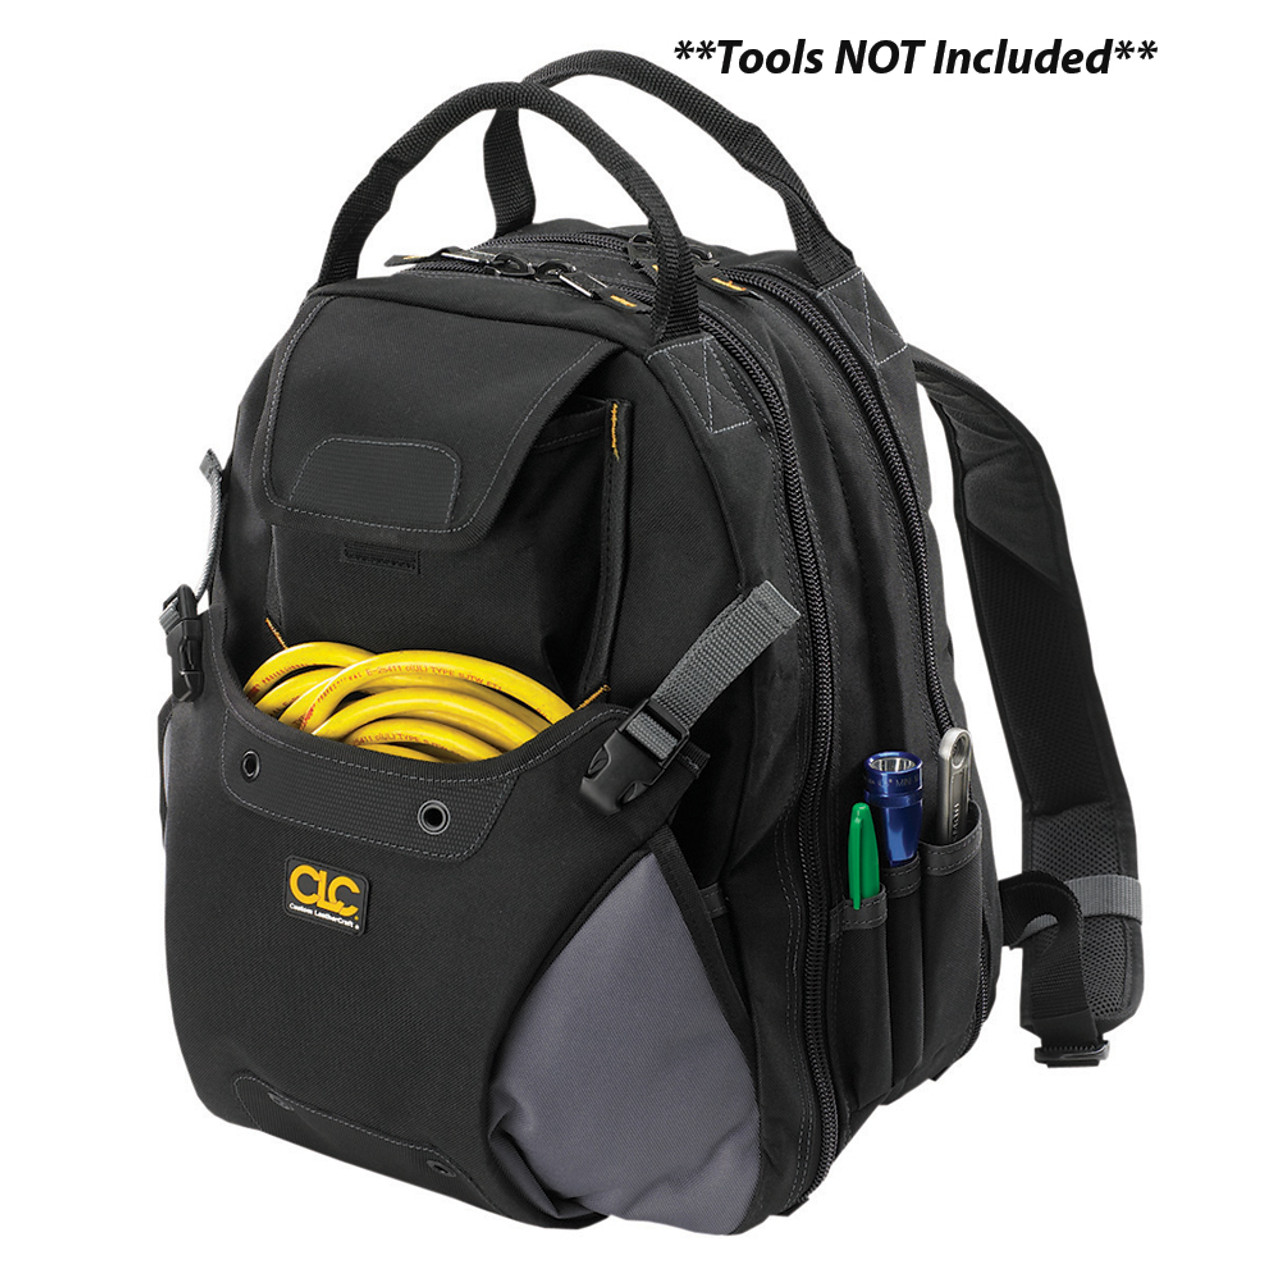 CLC Deluxe Tool Backpack, Black